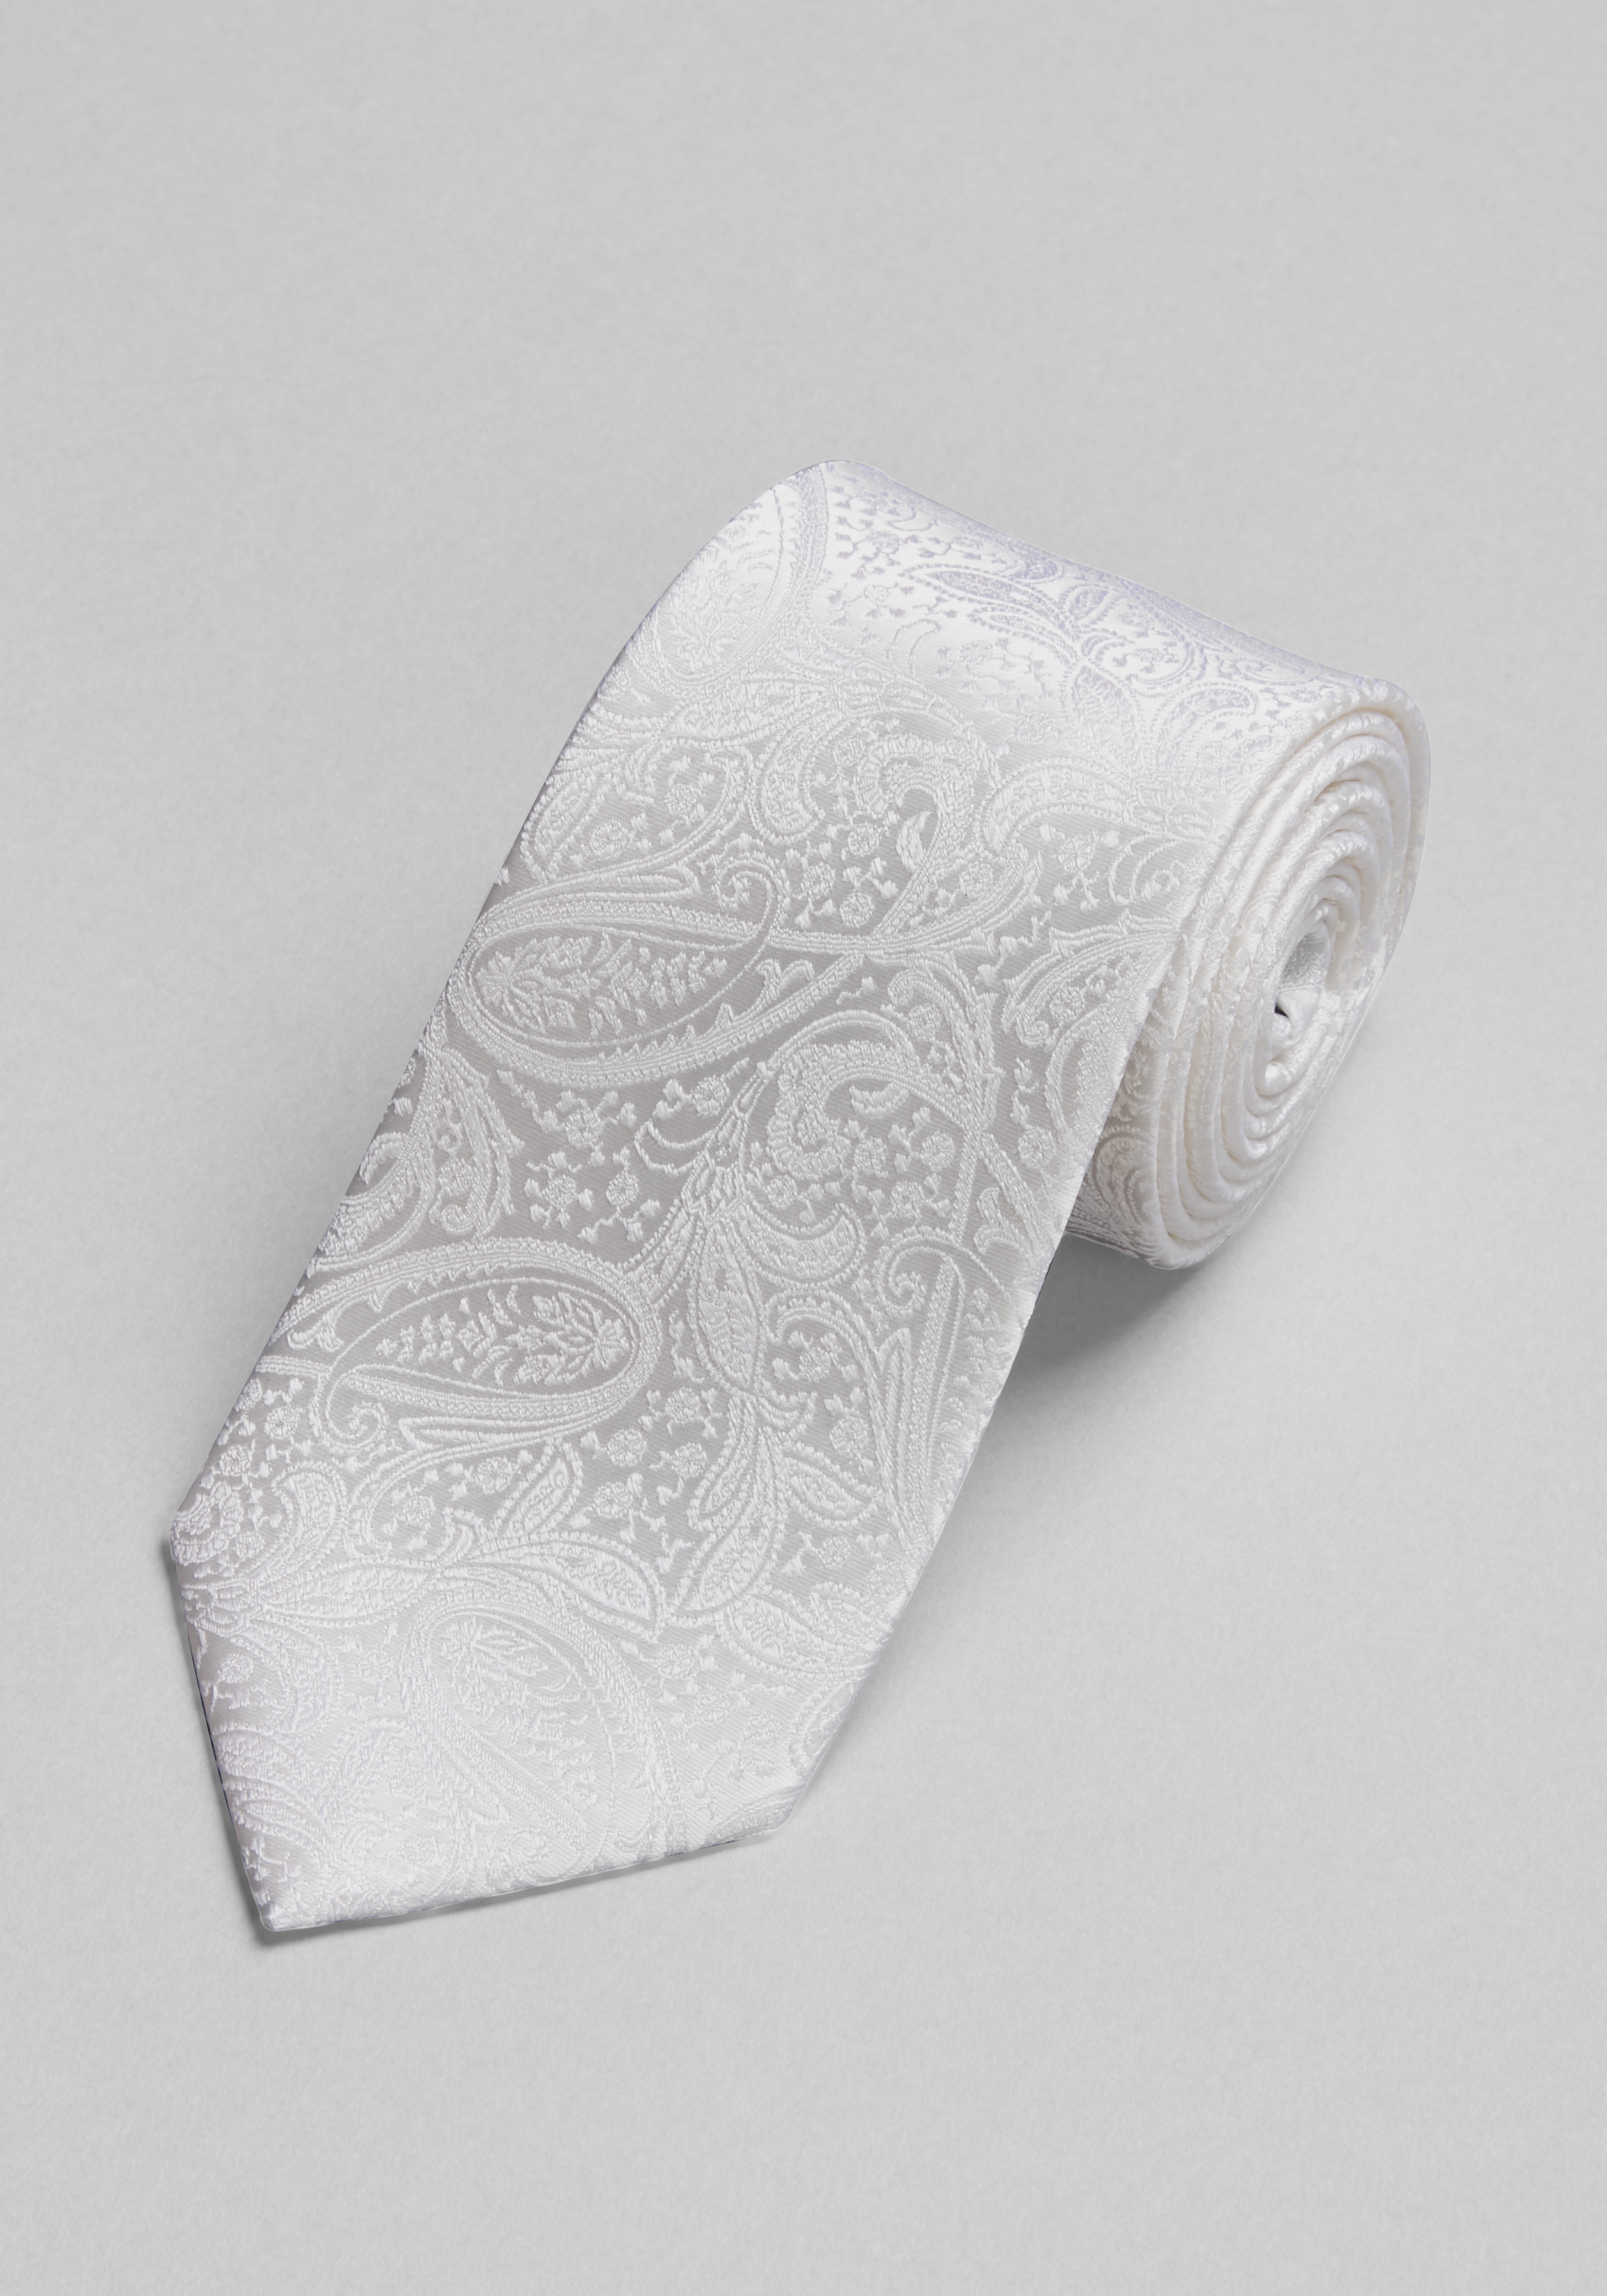 Tie Silk 100% New Necktie Wedding Floral Paisley Fashion Men's free p+p 2 for £3 